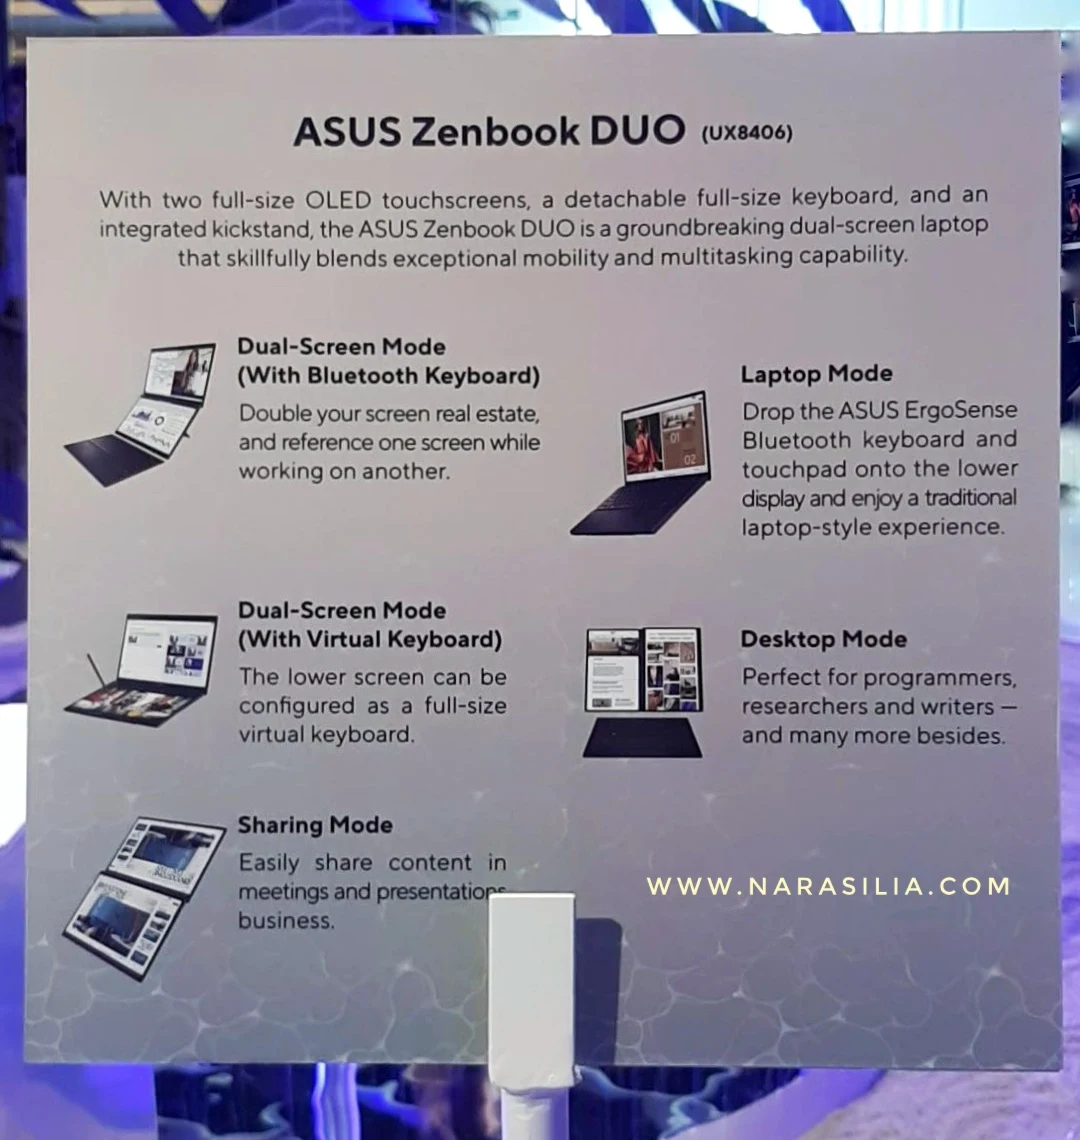 ASUS Zenbook DUO Mode